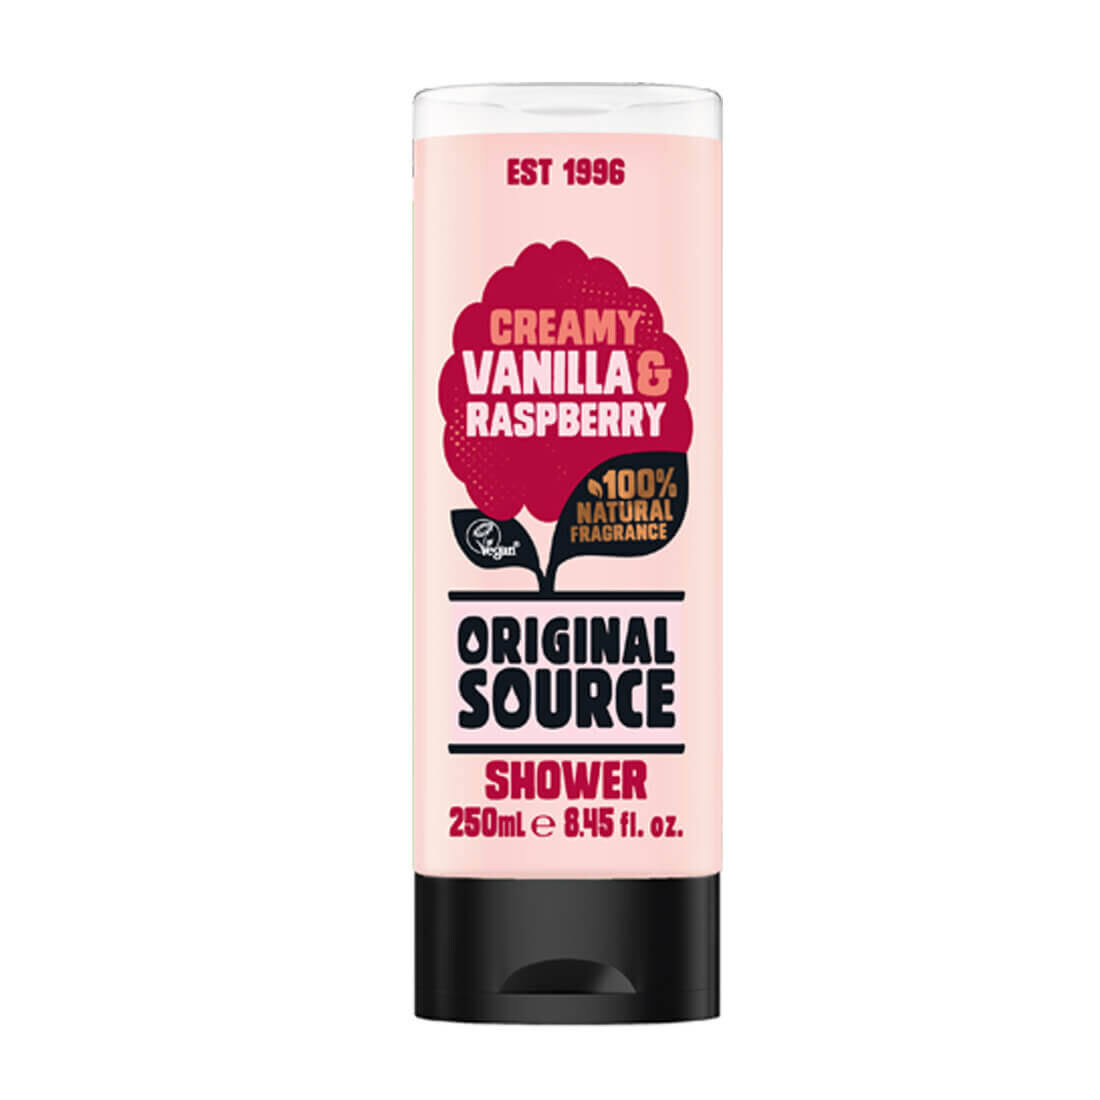 Original Source Creamy Vanilla & Raspberry Shower - 250ml